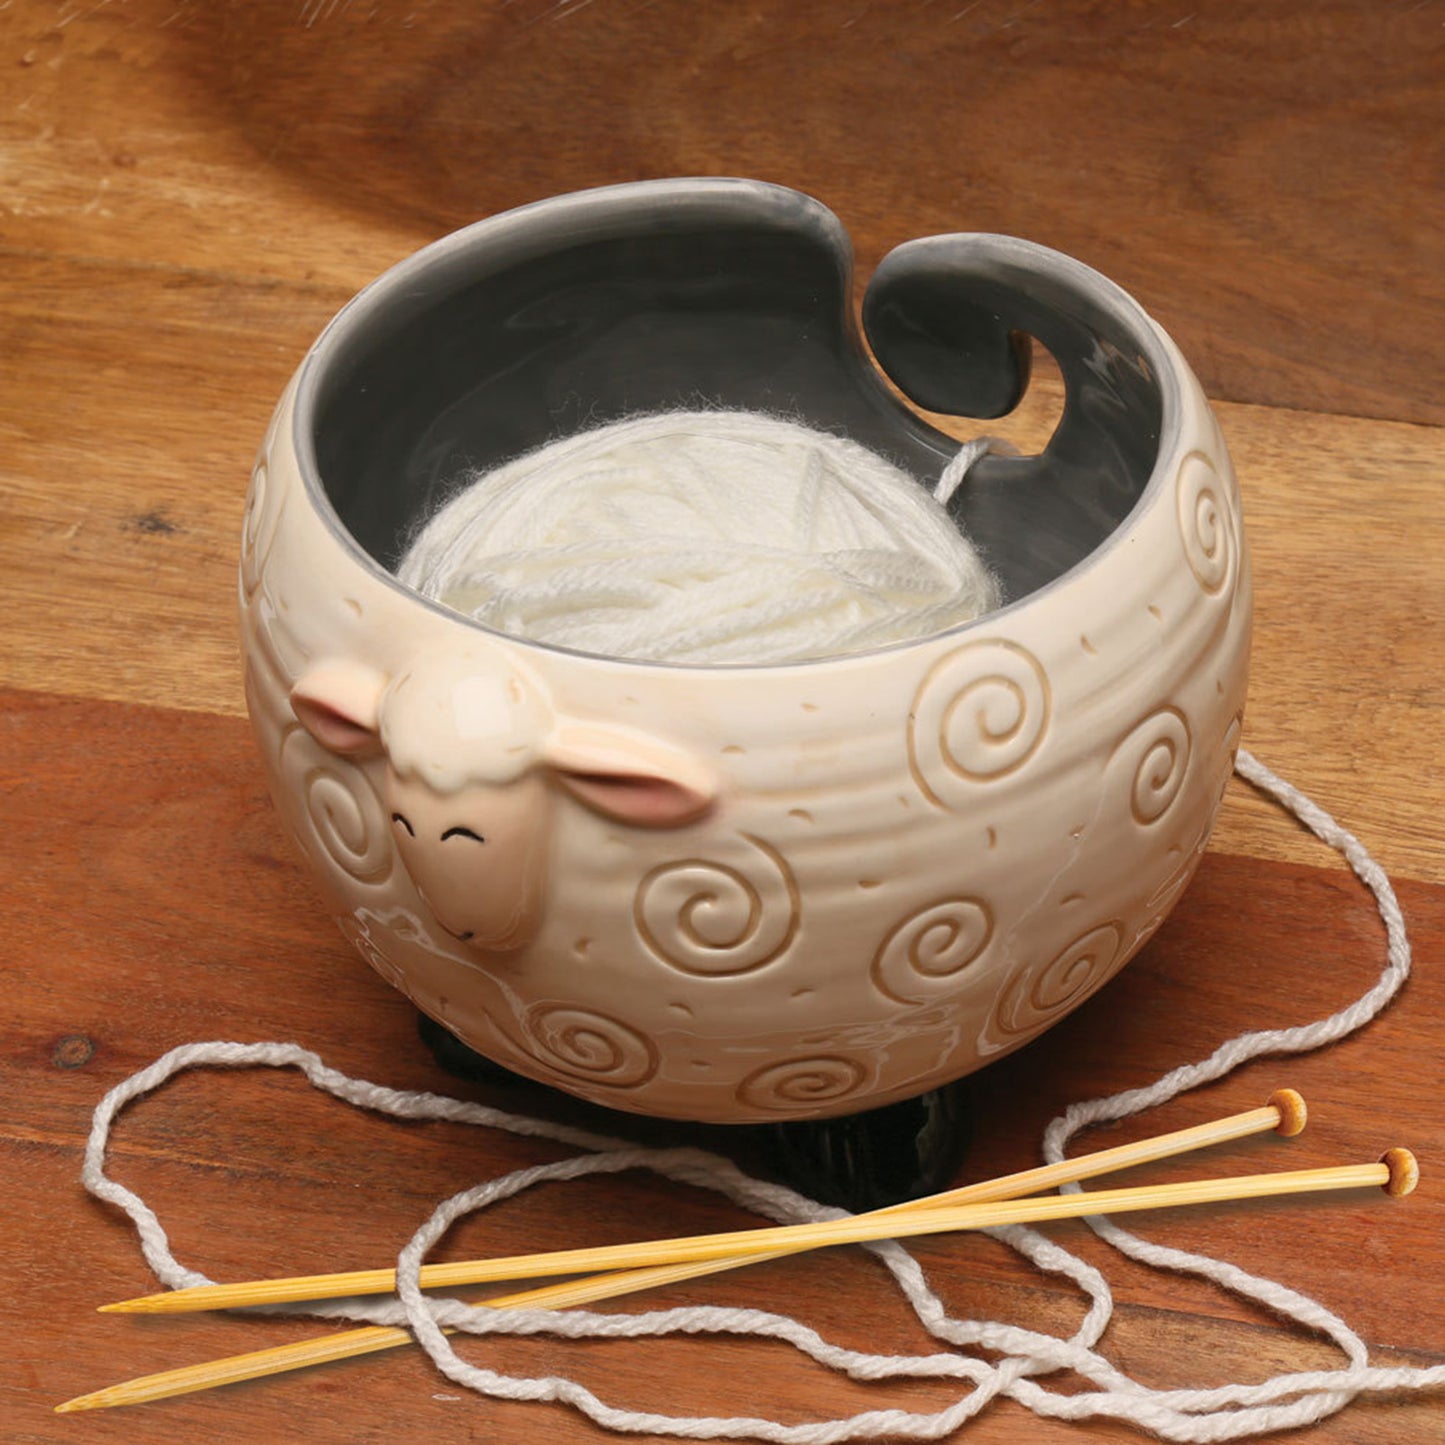 Ceramic Sheep-shaped Wool Storage Bowl, Yarn Bowl